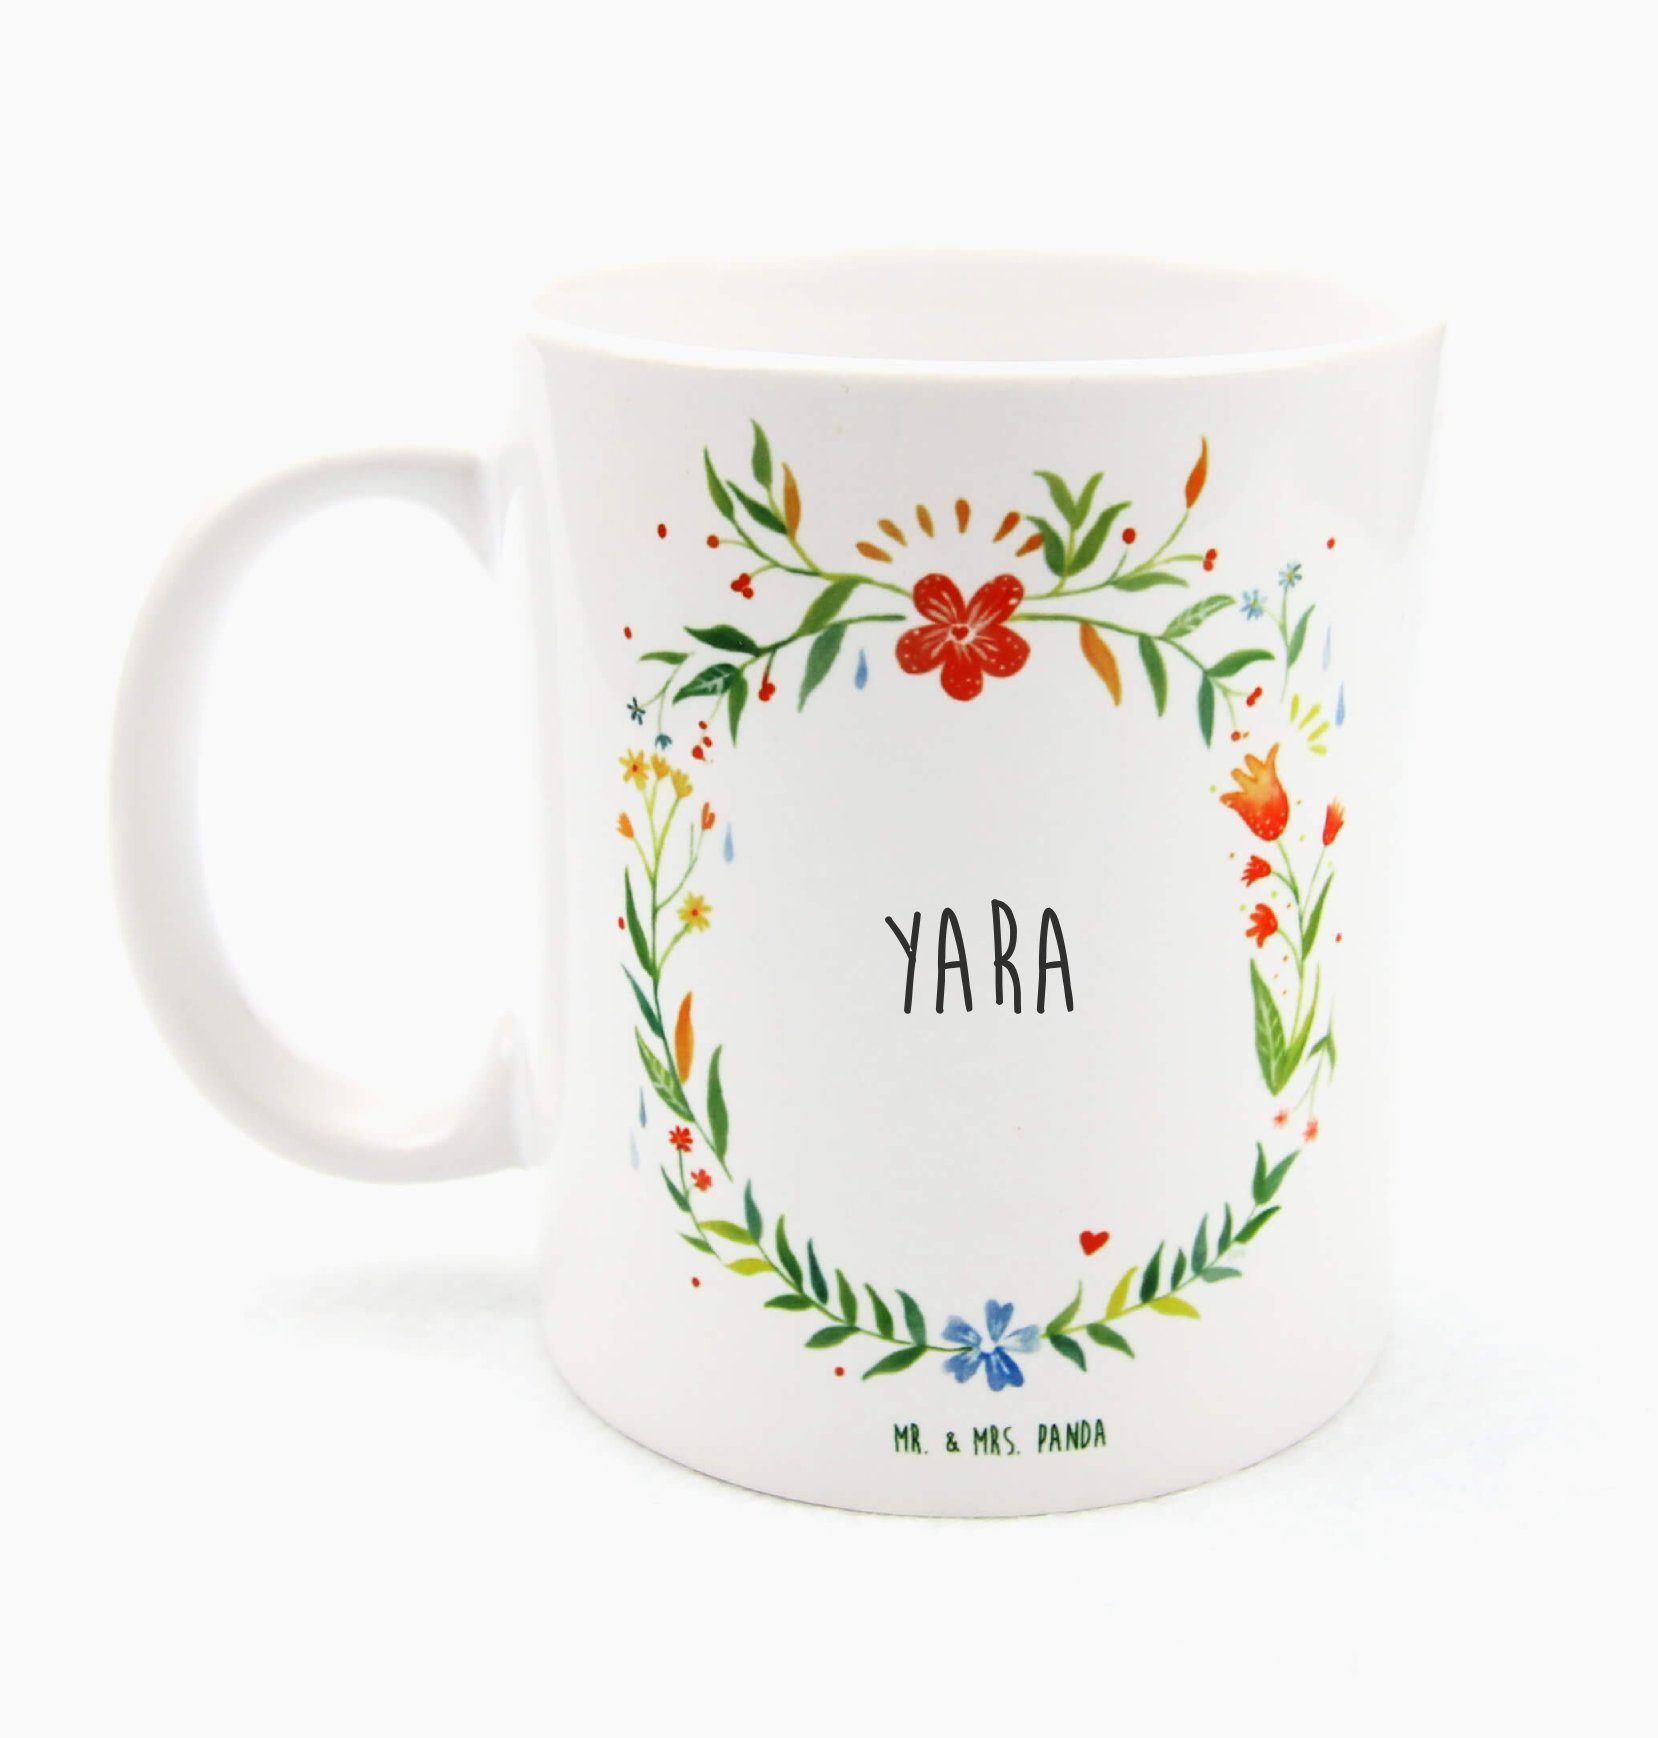 Mr. & Mrs. Panda Tasse Porzellantasse, Motive, Kaffee, - Tasse Geschenk, Yara Geschenk Tasse, Keramik